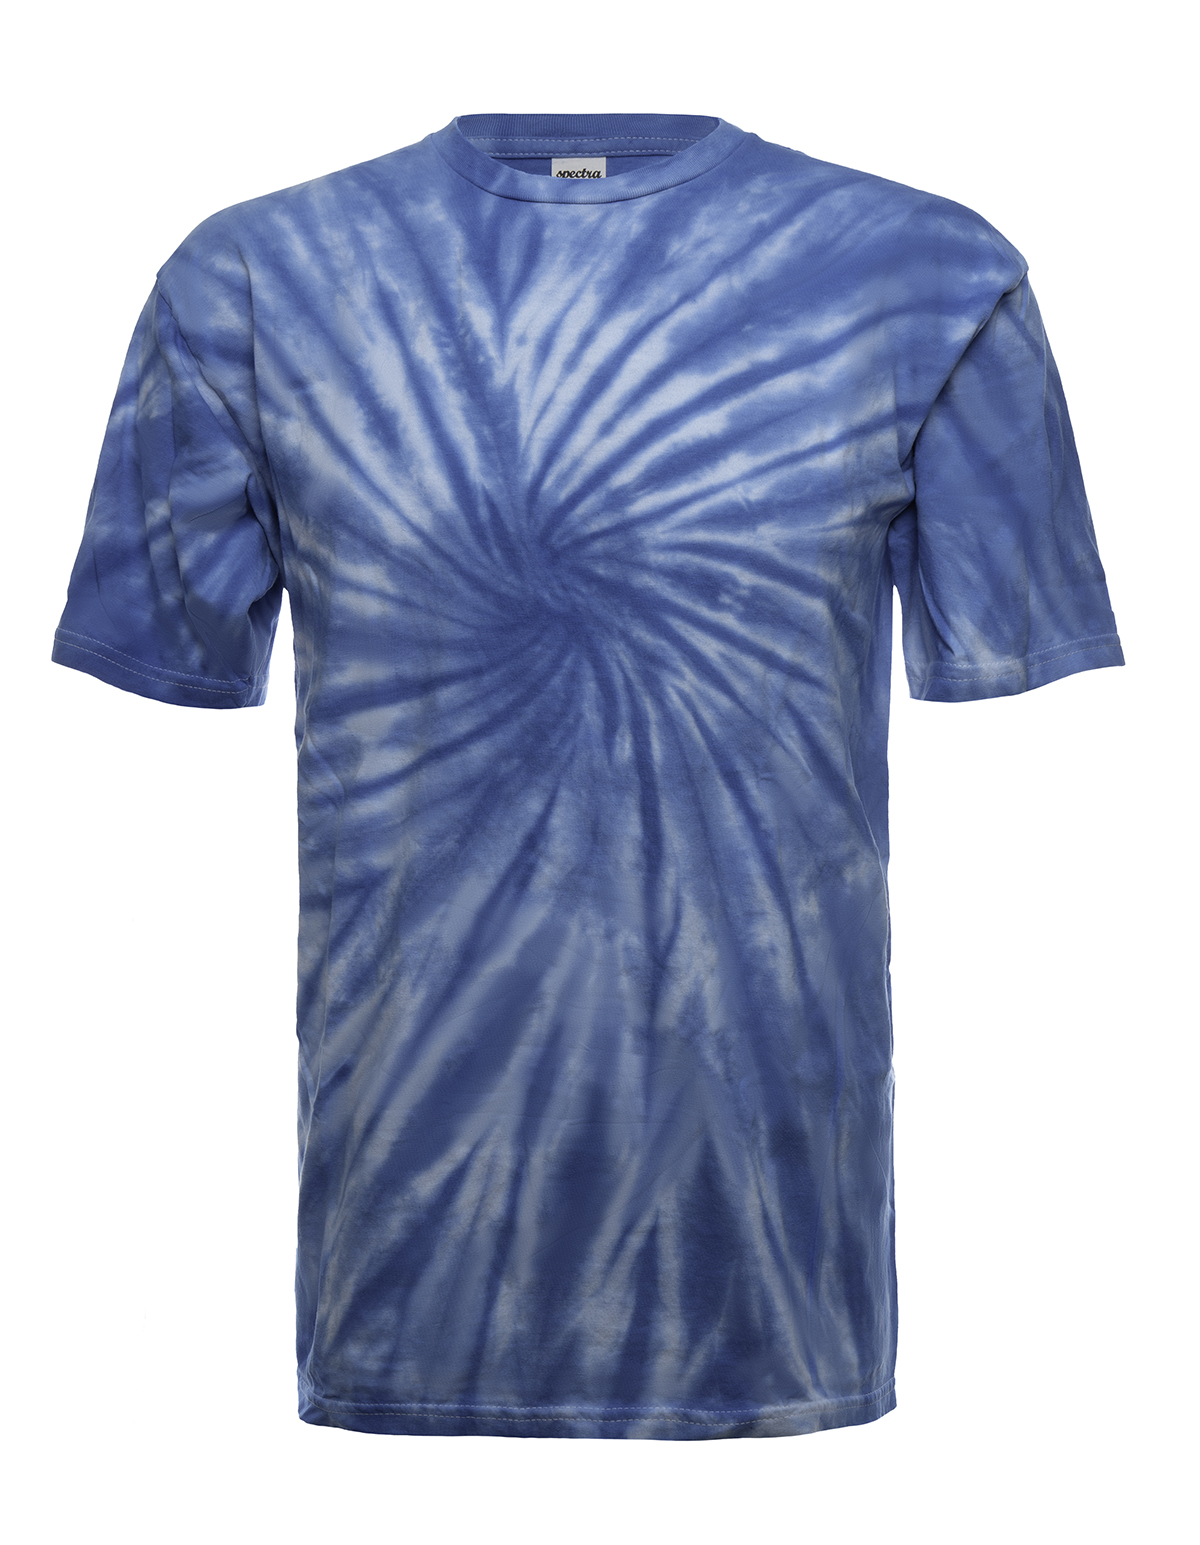 21 SPIRAL- Single Spiral Sky Front T-shirt